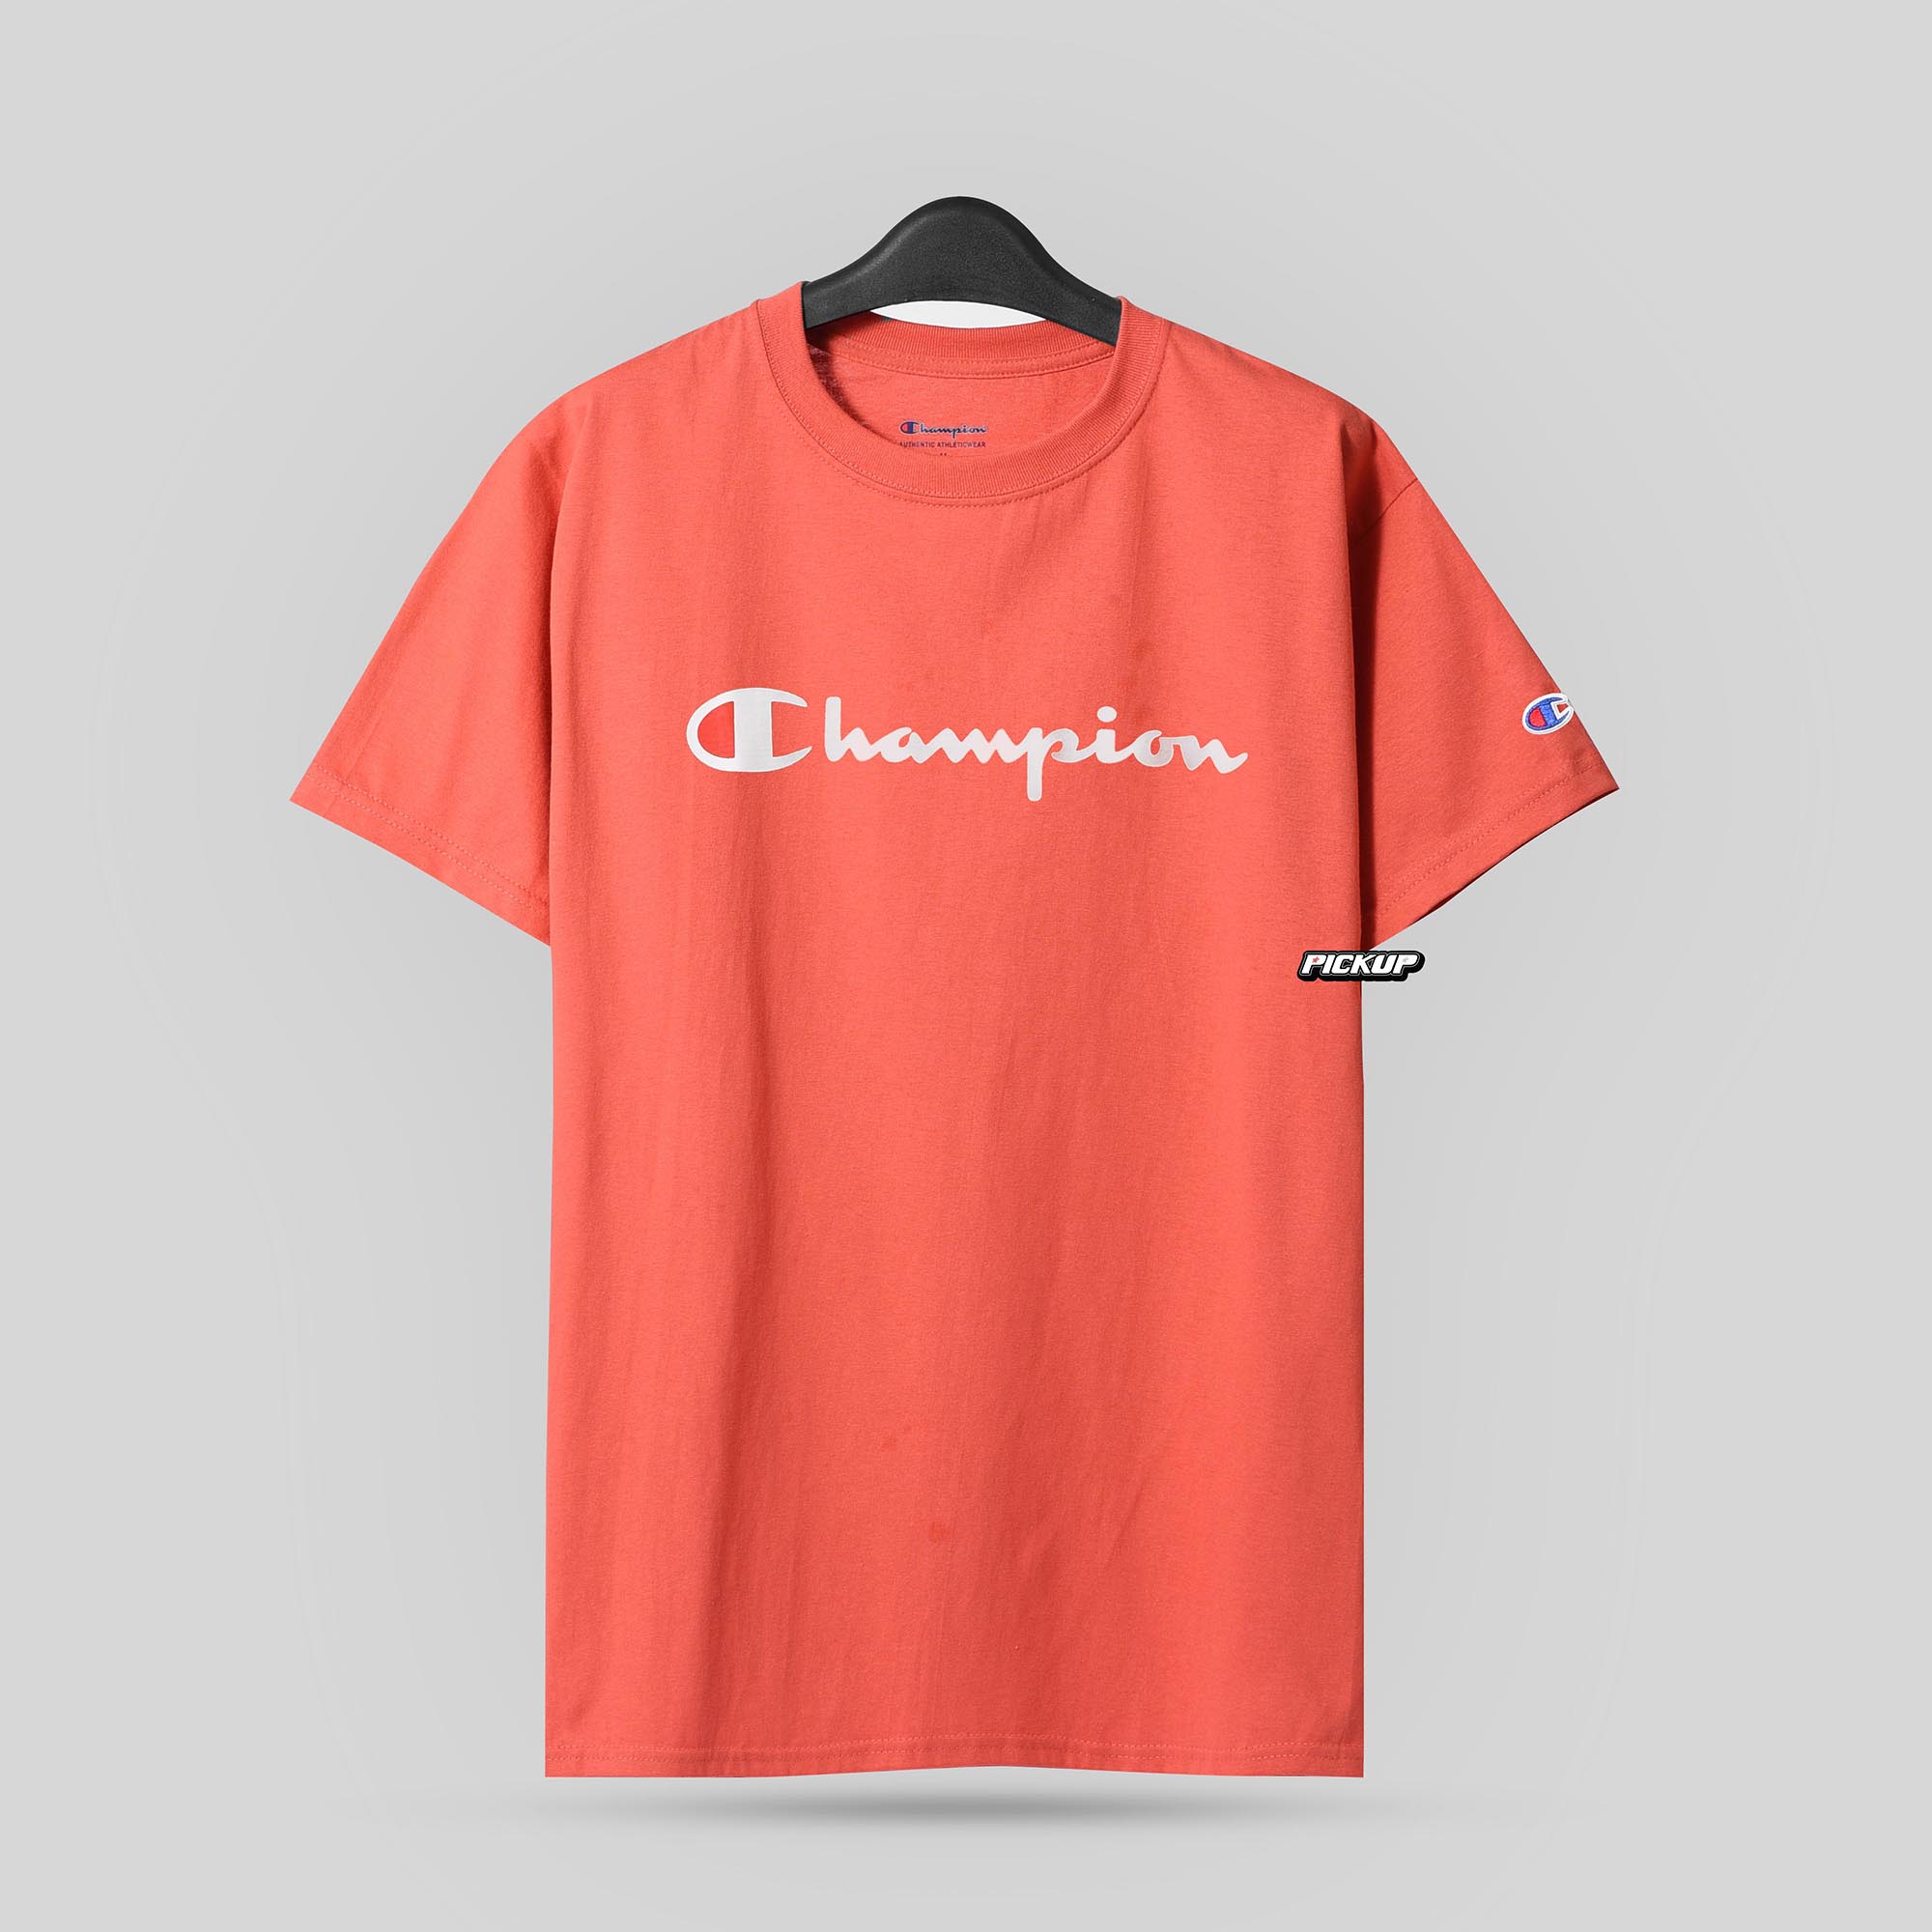 Champion Tagless Tshirt, Printed Logo - Red River Clay